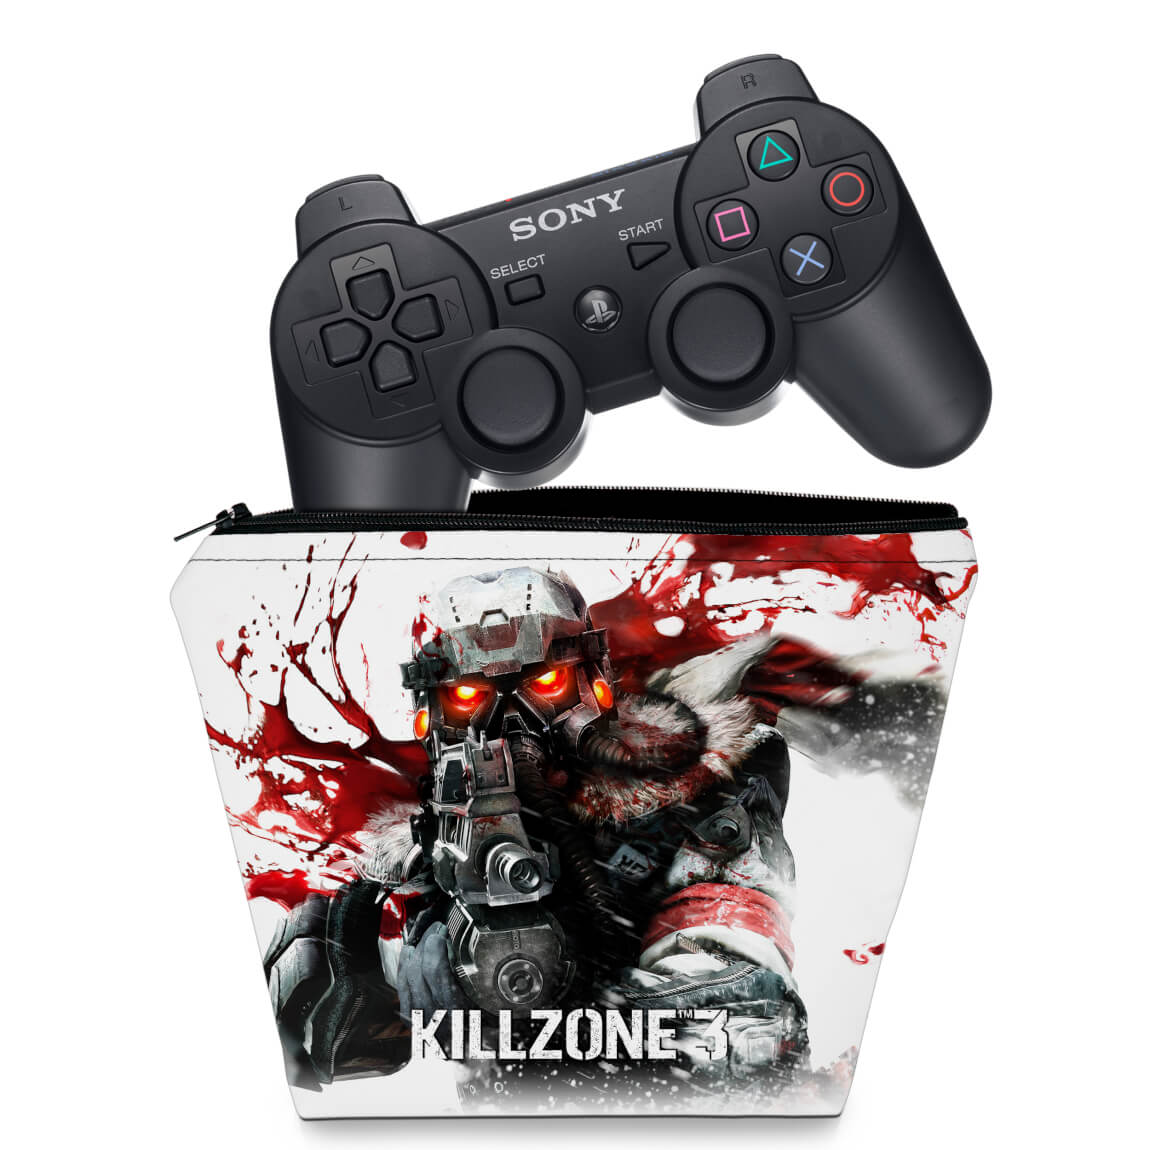 Killzone 3 for PlayStation 3